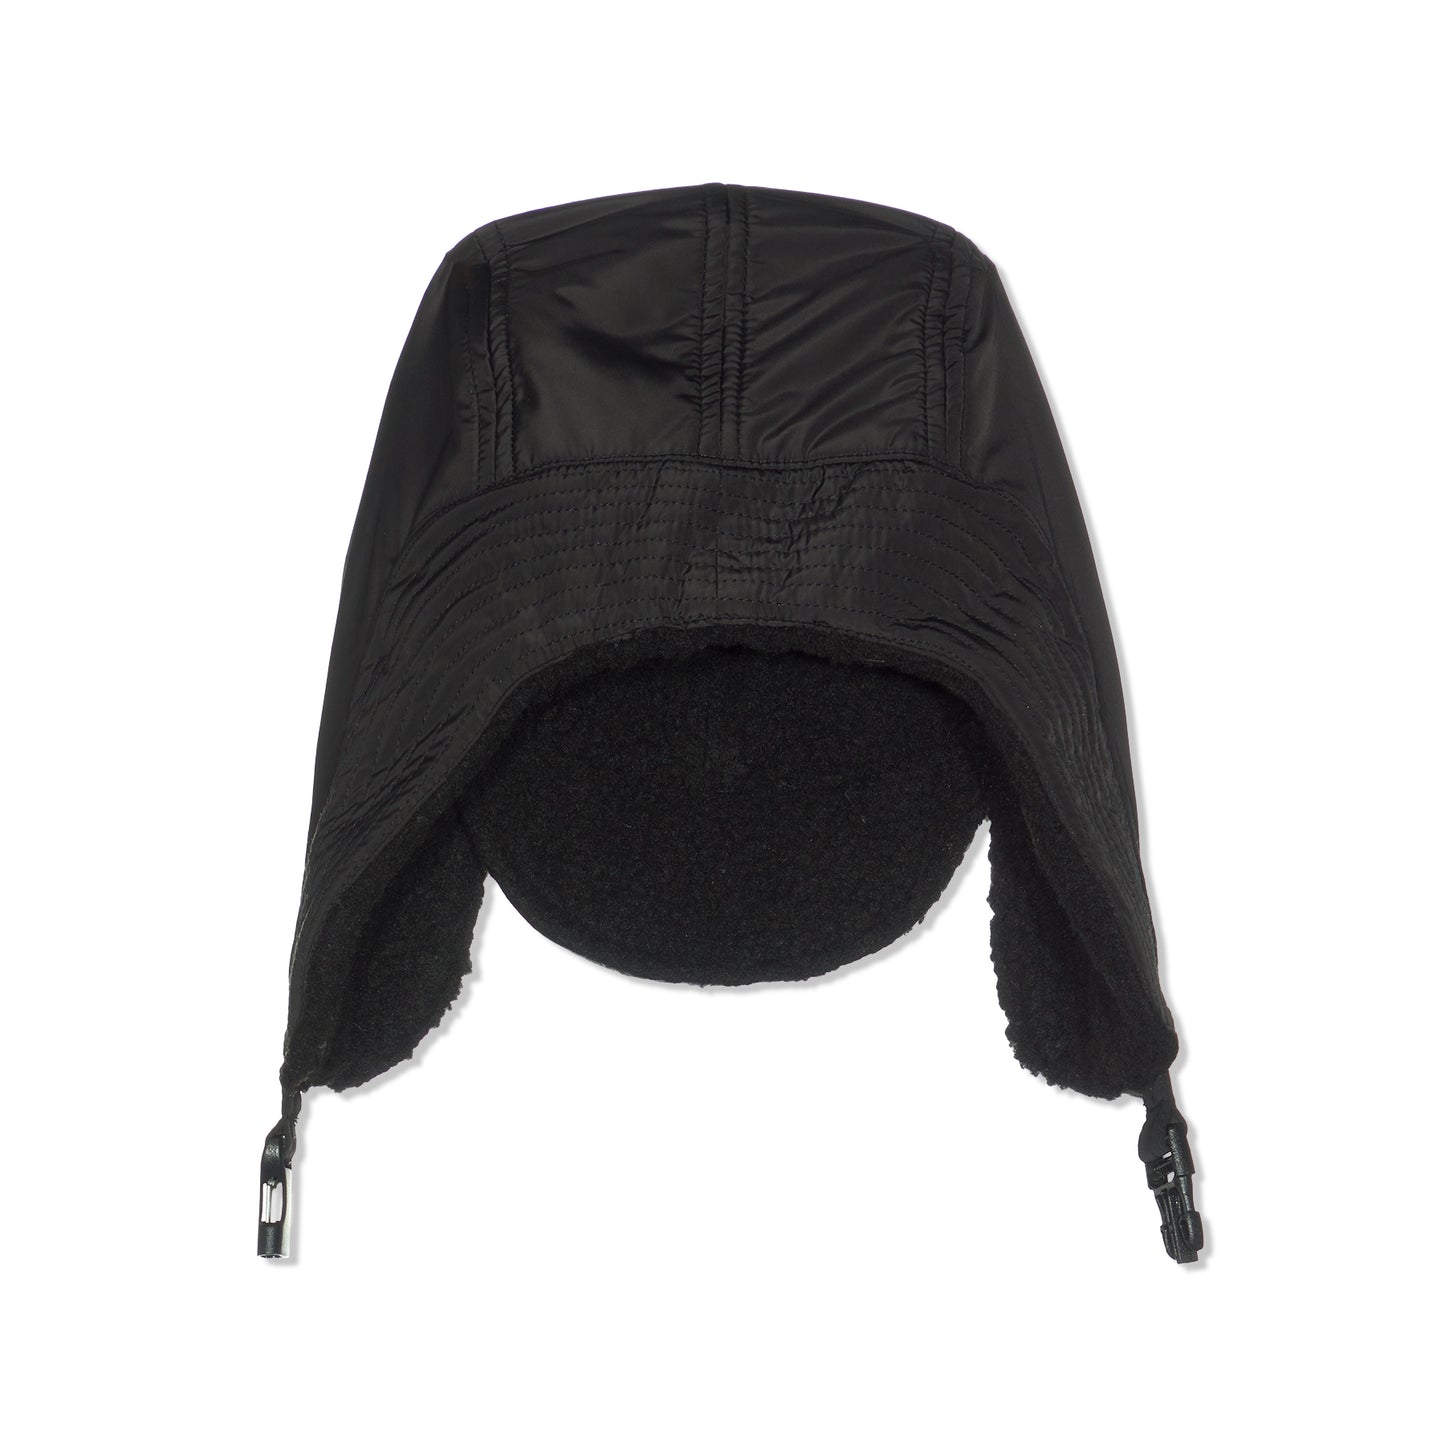 Patta Reversible Hunting Flap Cap (Black)